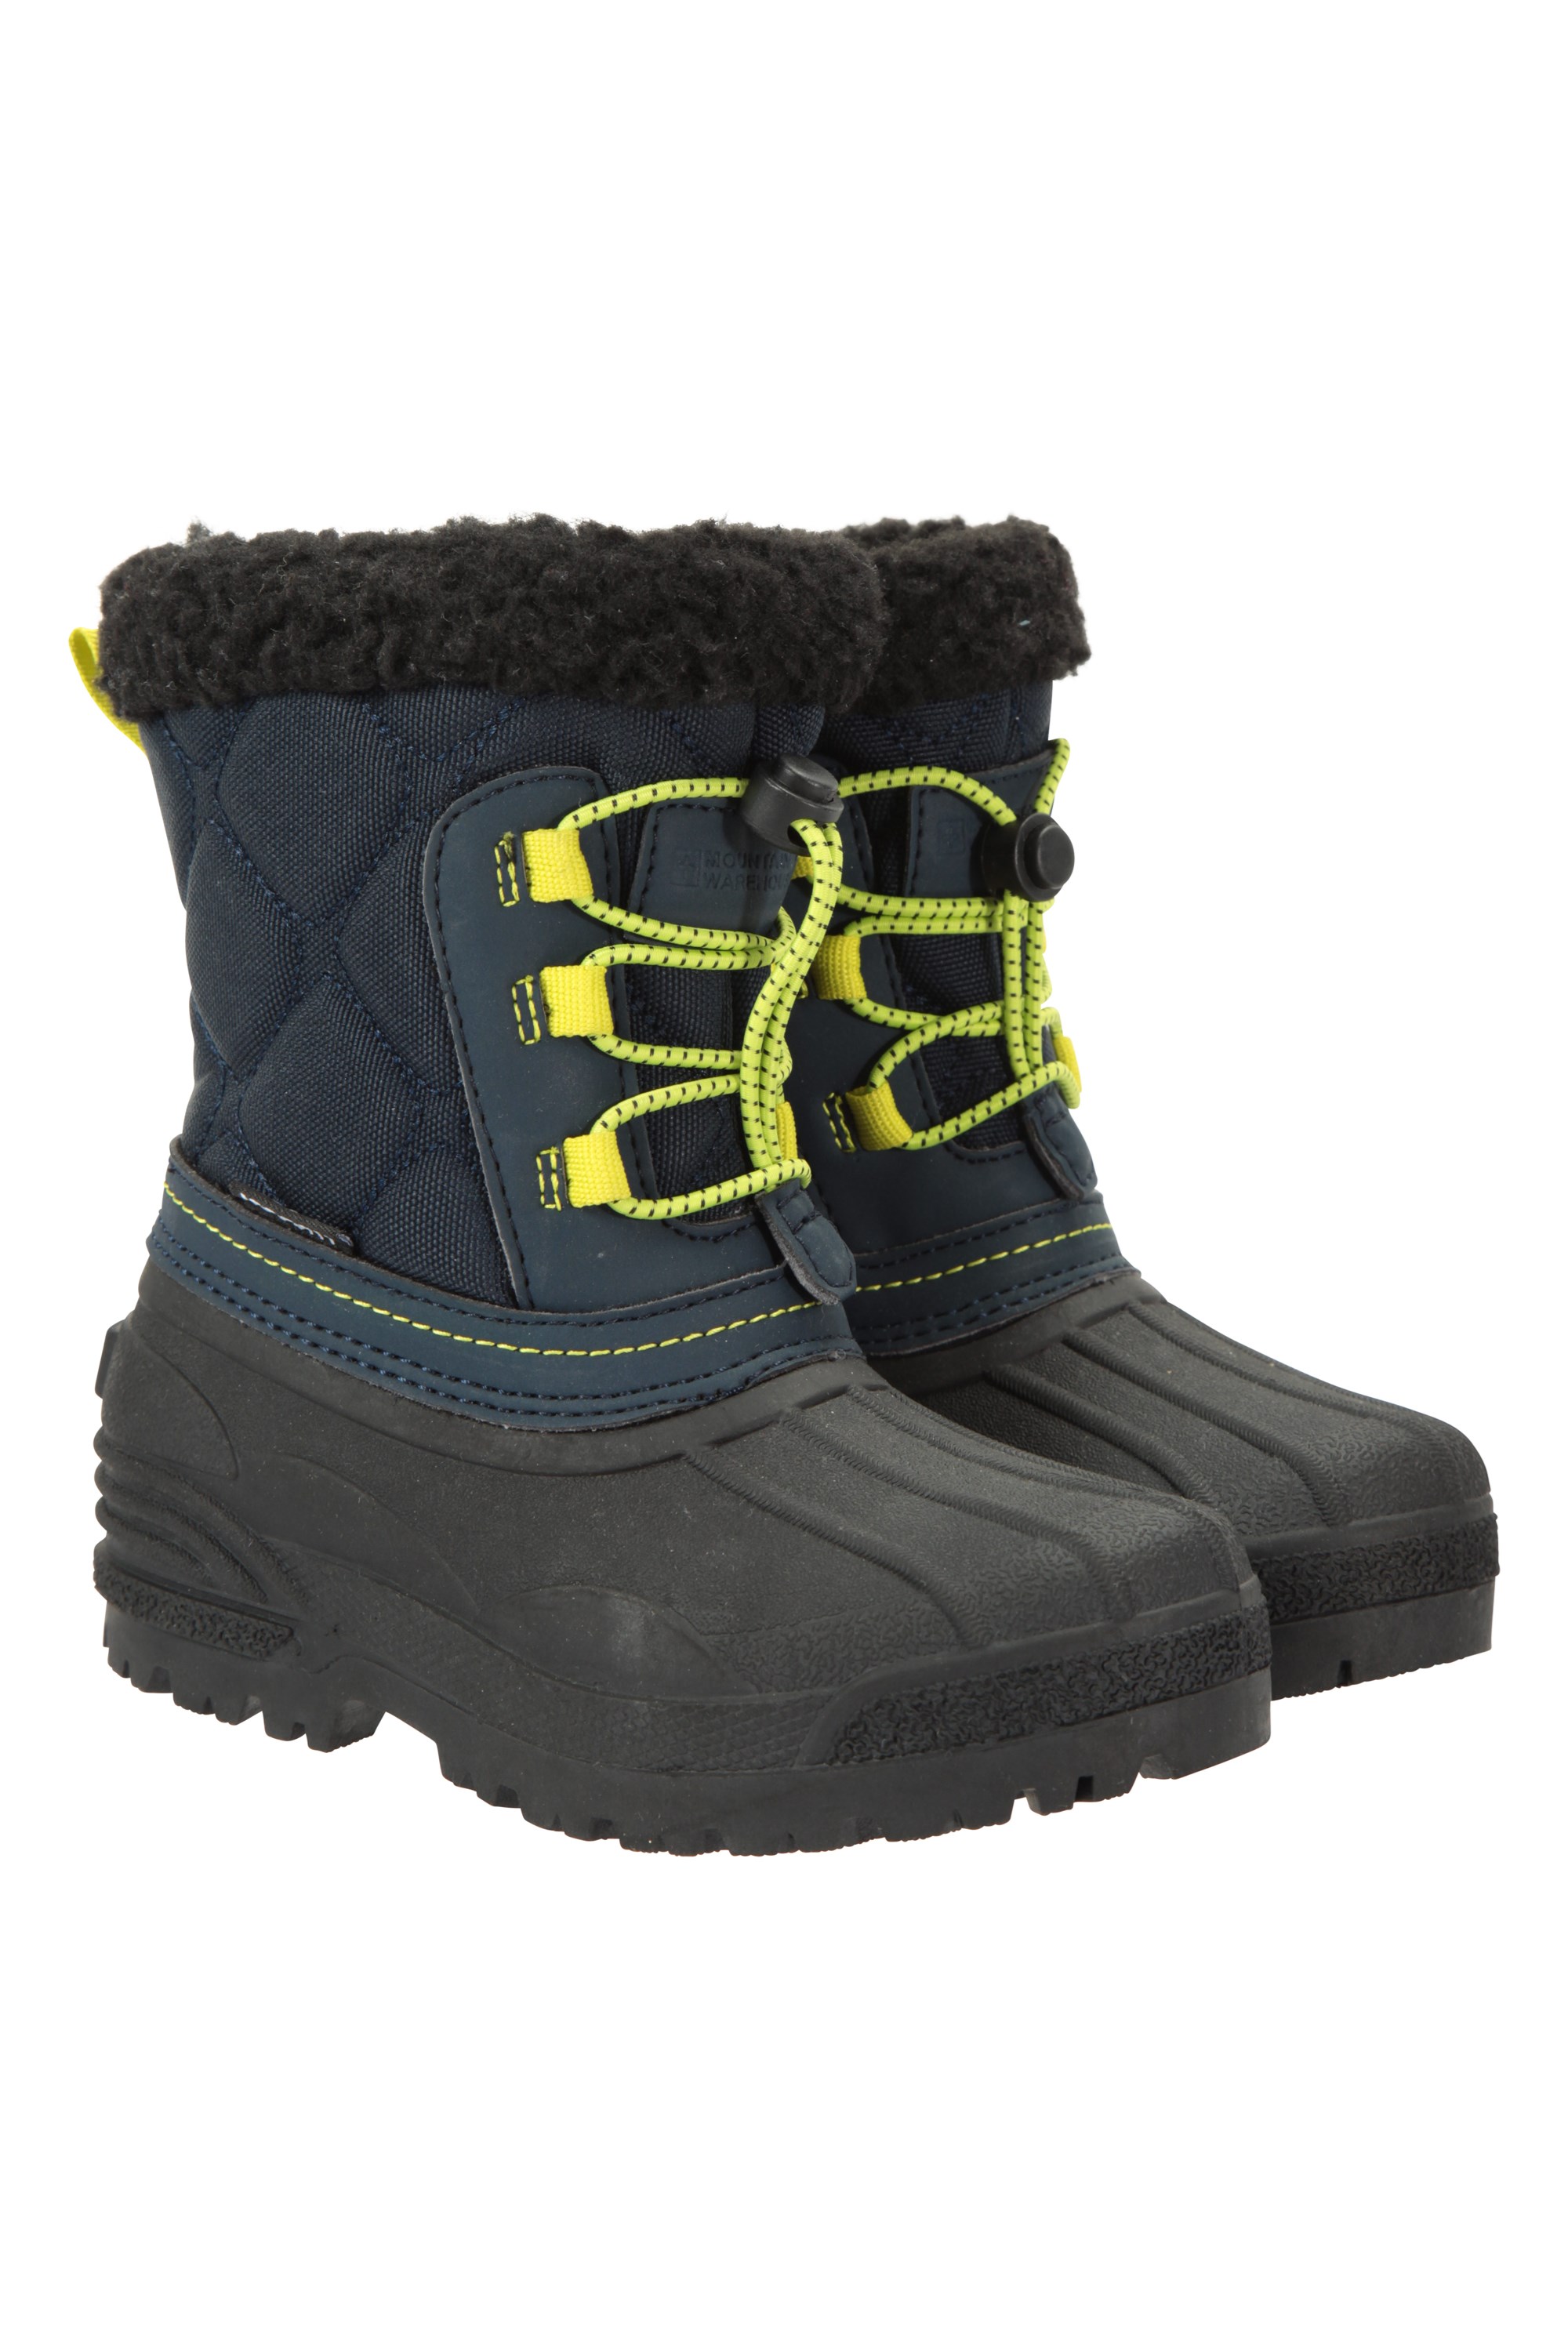 Mountain Warehouse Arctic Fur Trim Junior Waterproof Snow Boots Blue